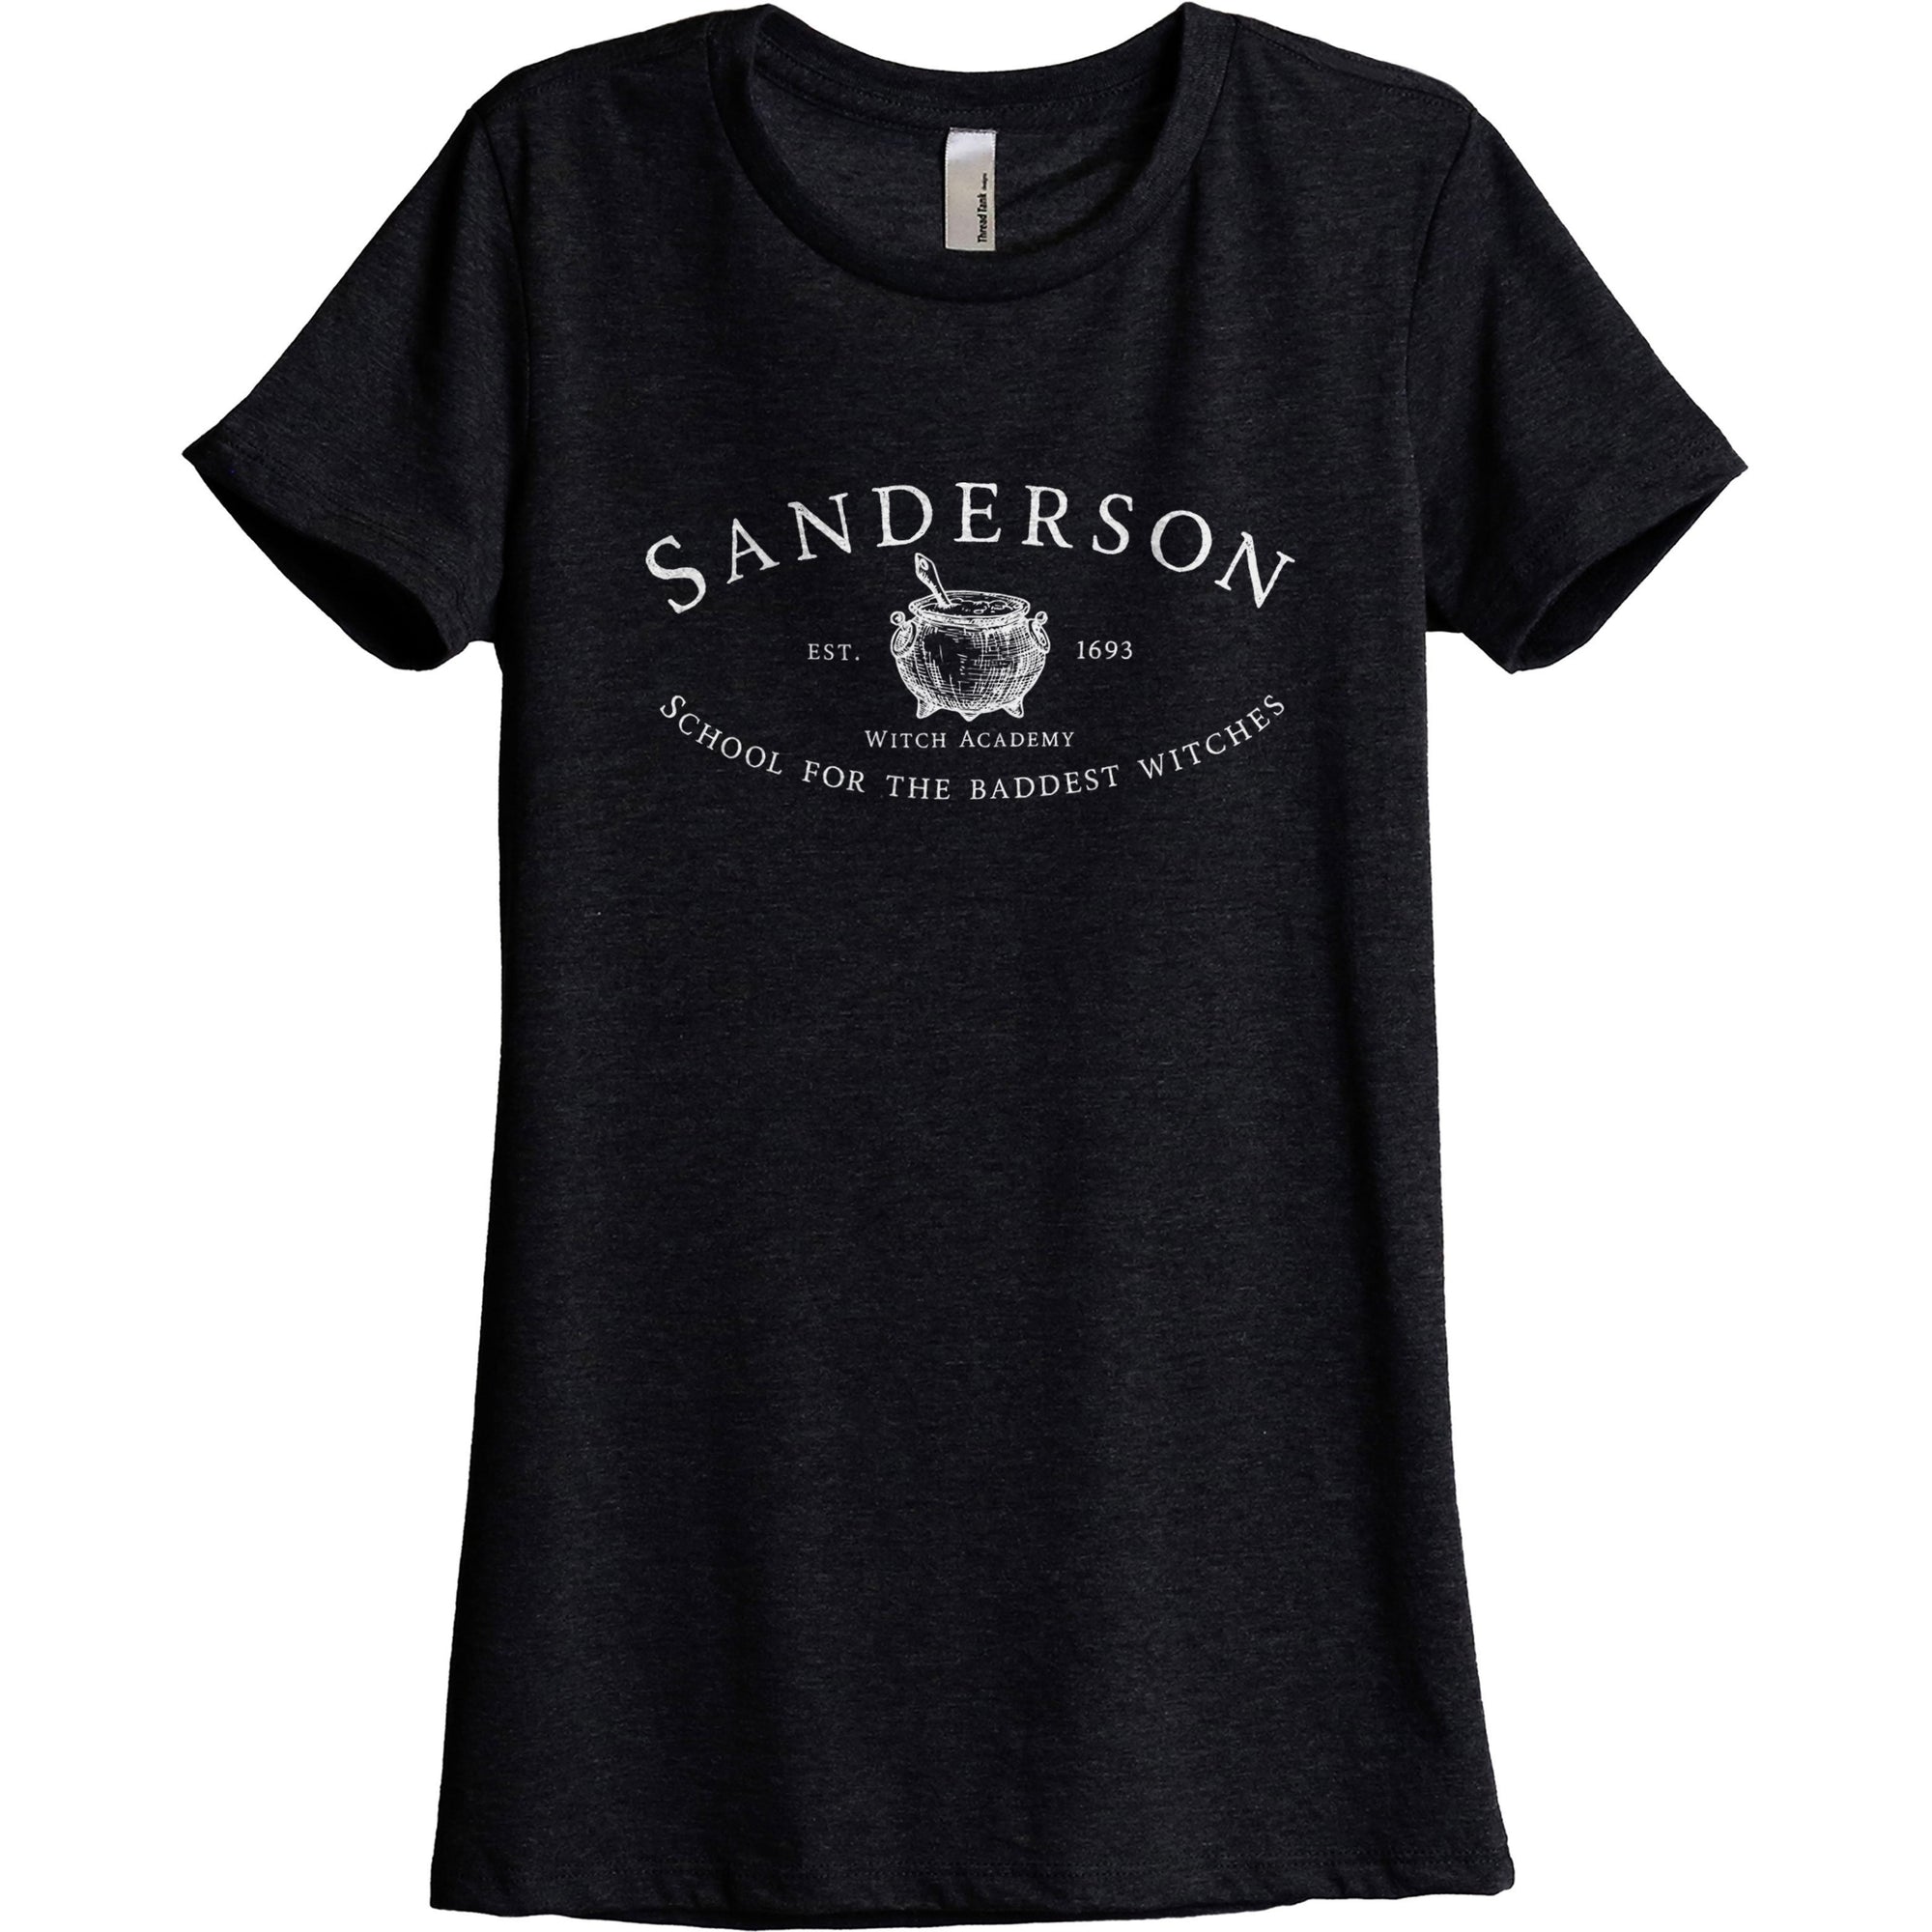 Sanderson Witch Academy